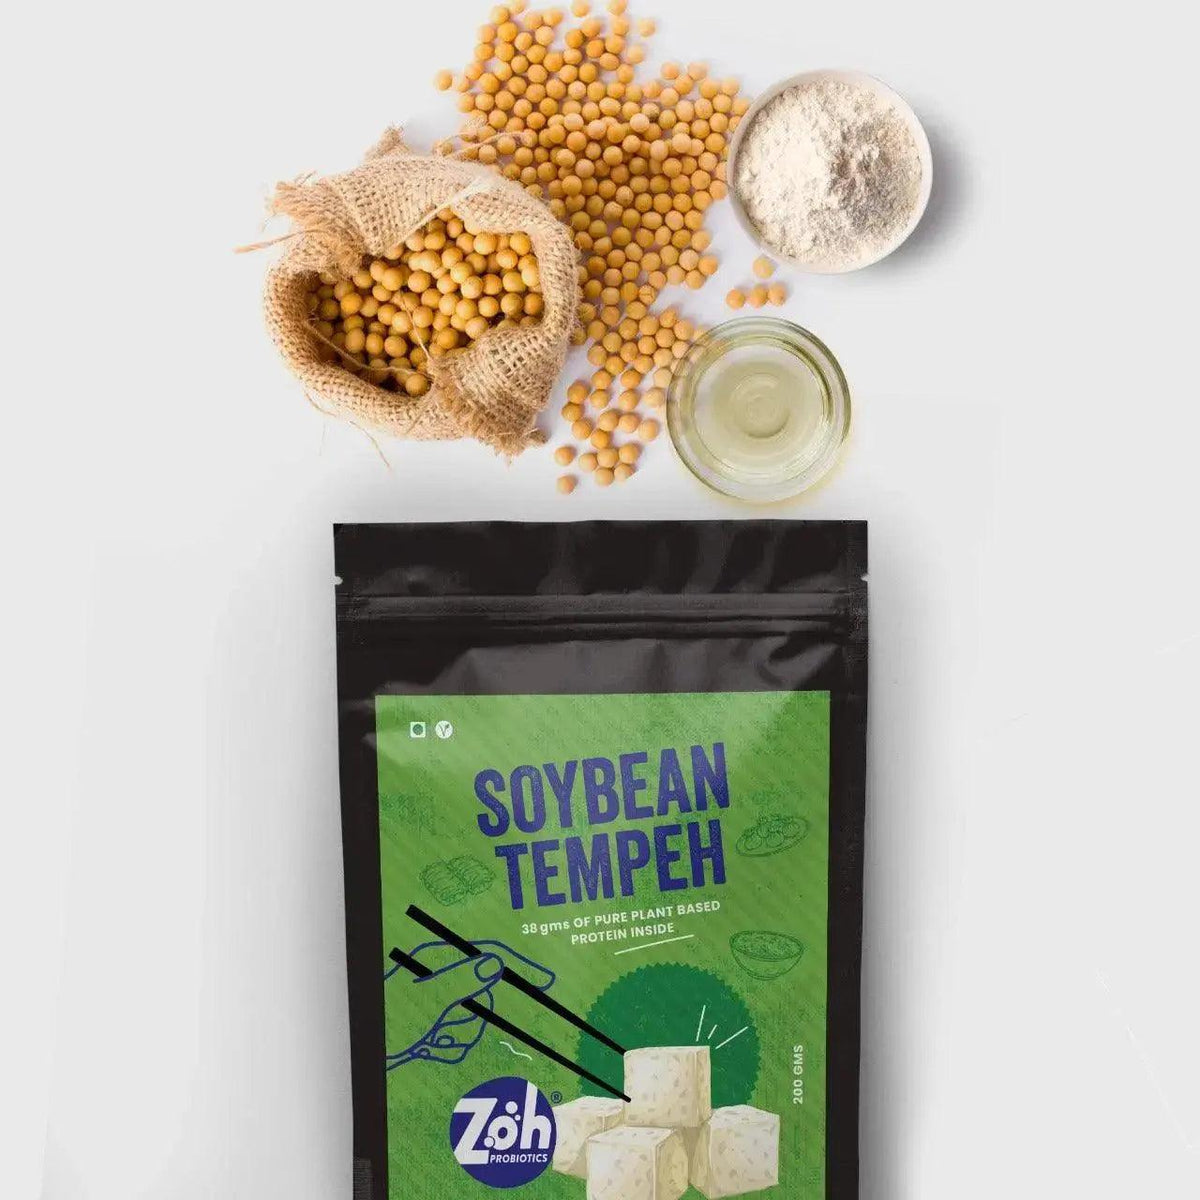 Bulk buy Zoh Plain Soybean Tempeh with fresh ingredients, top plant-based protein in Mumbai